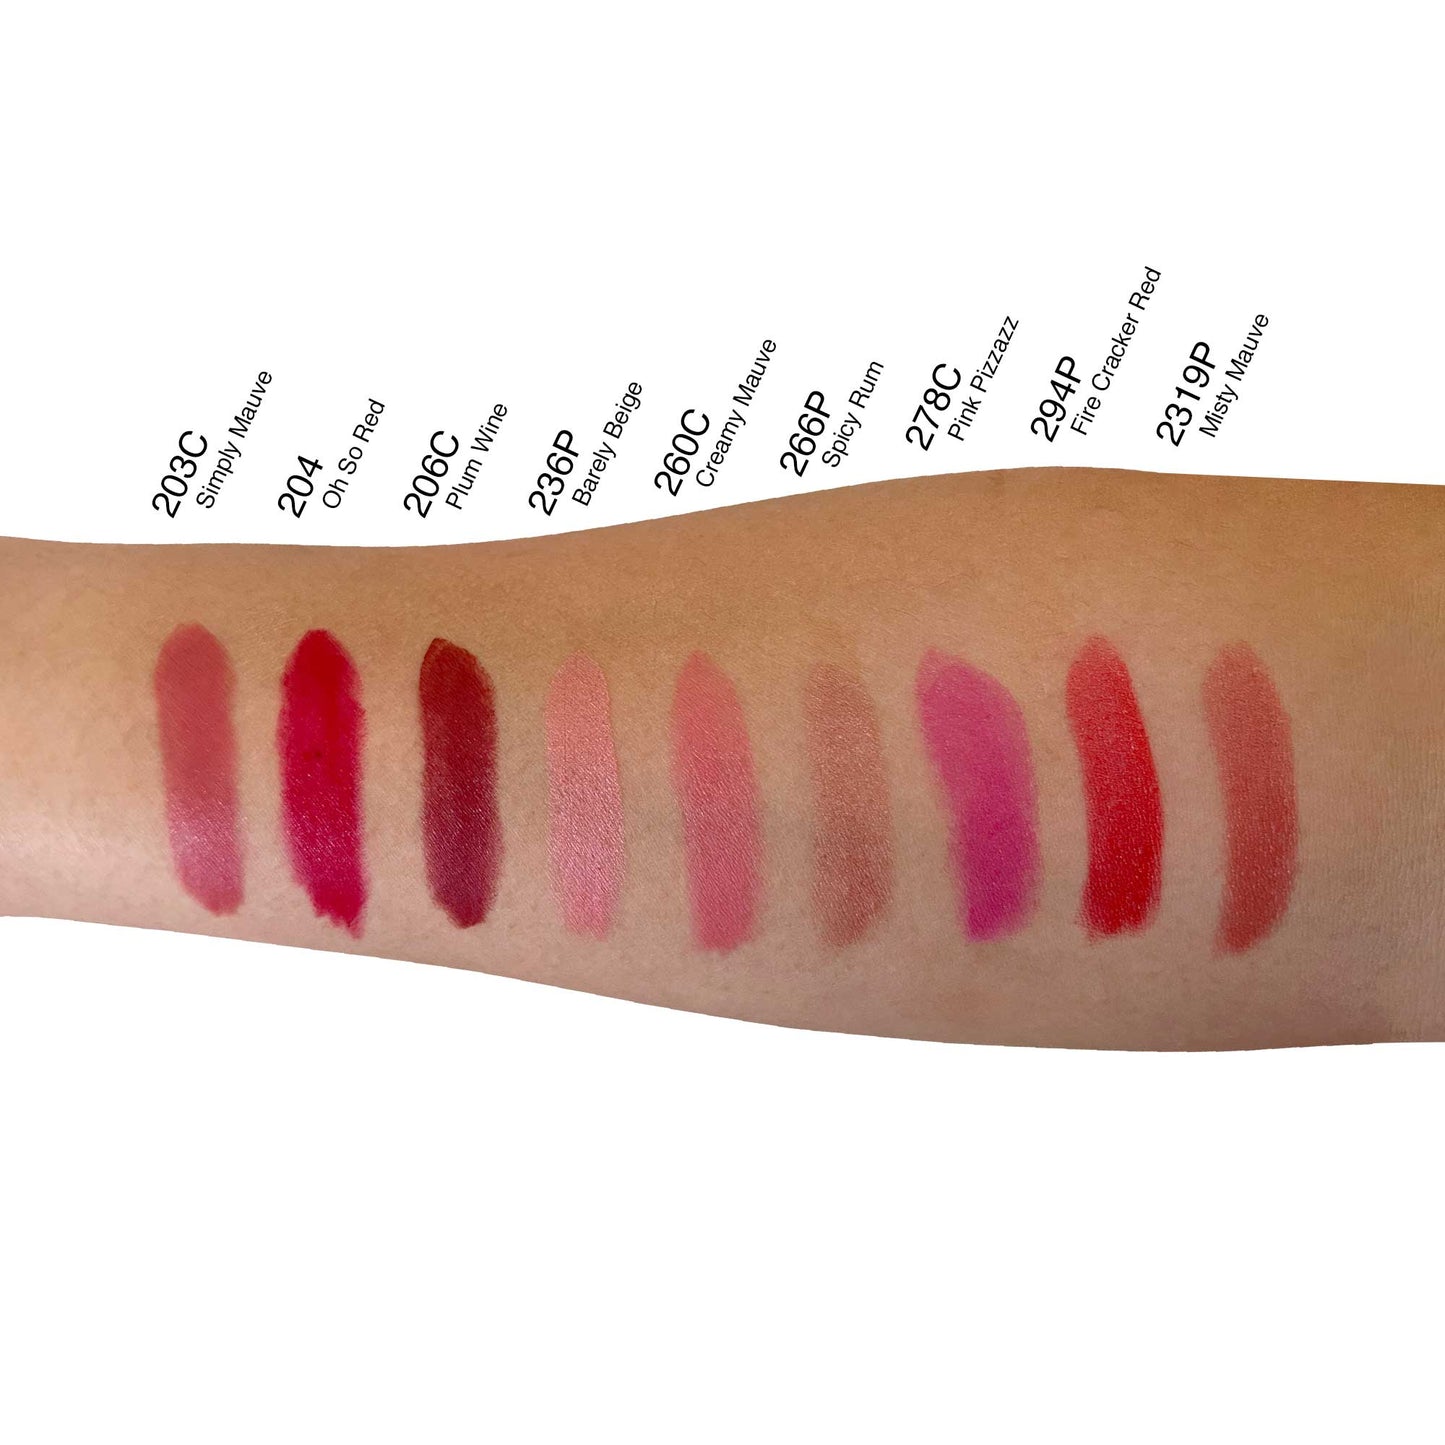 Lipstick - Barely Beige